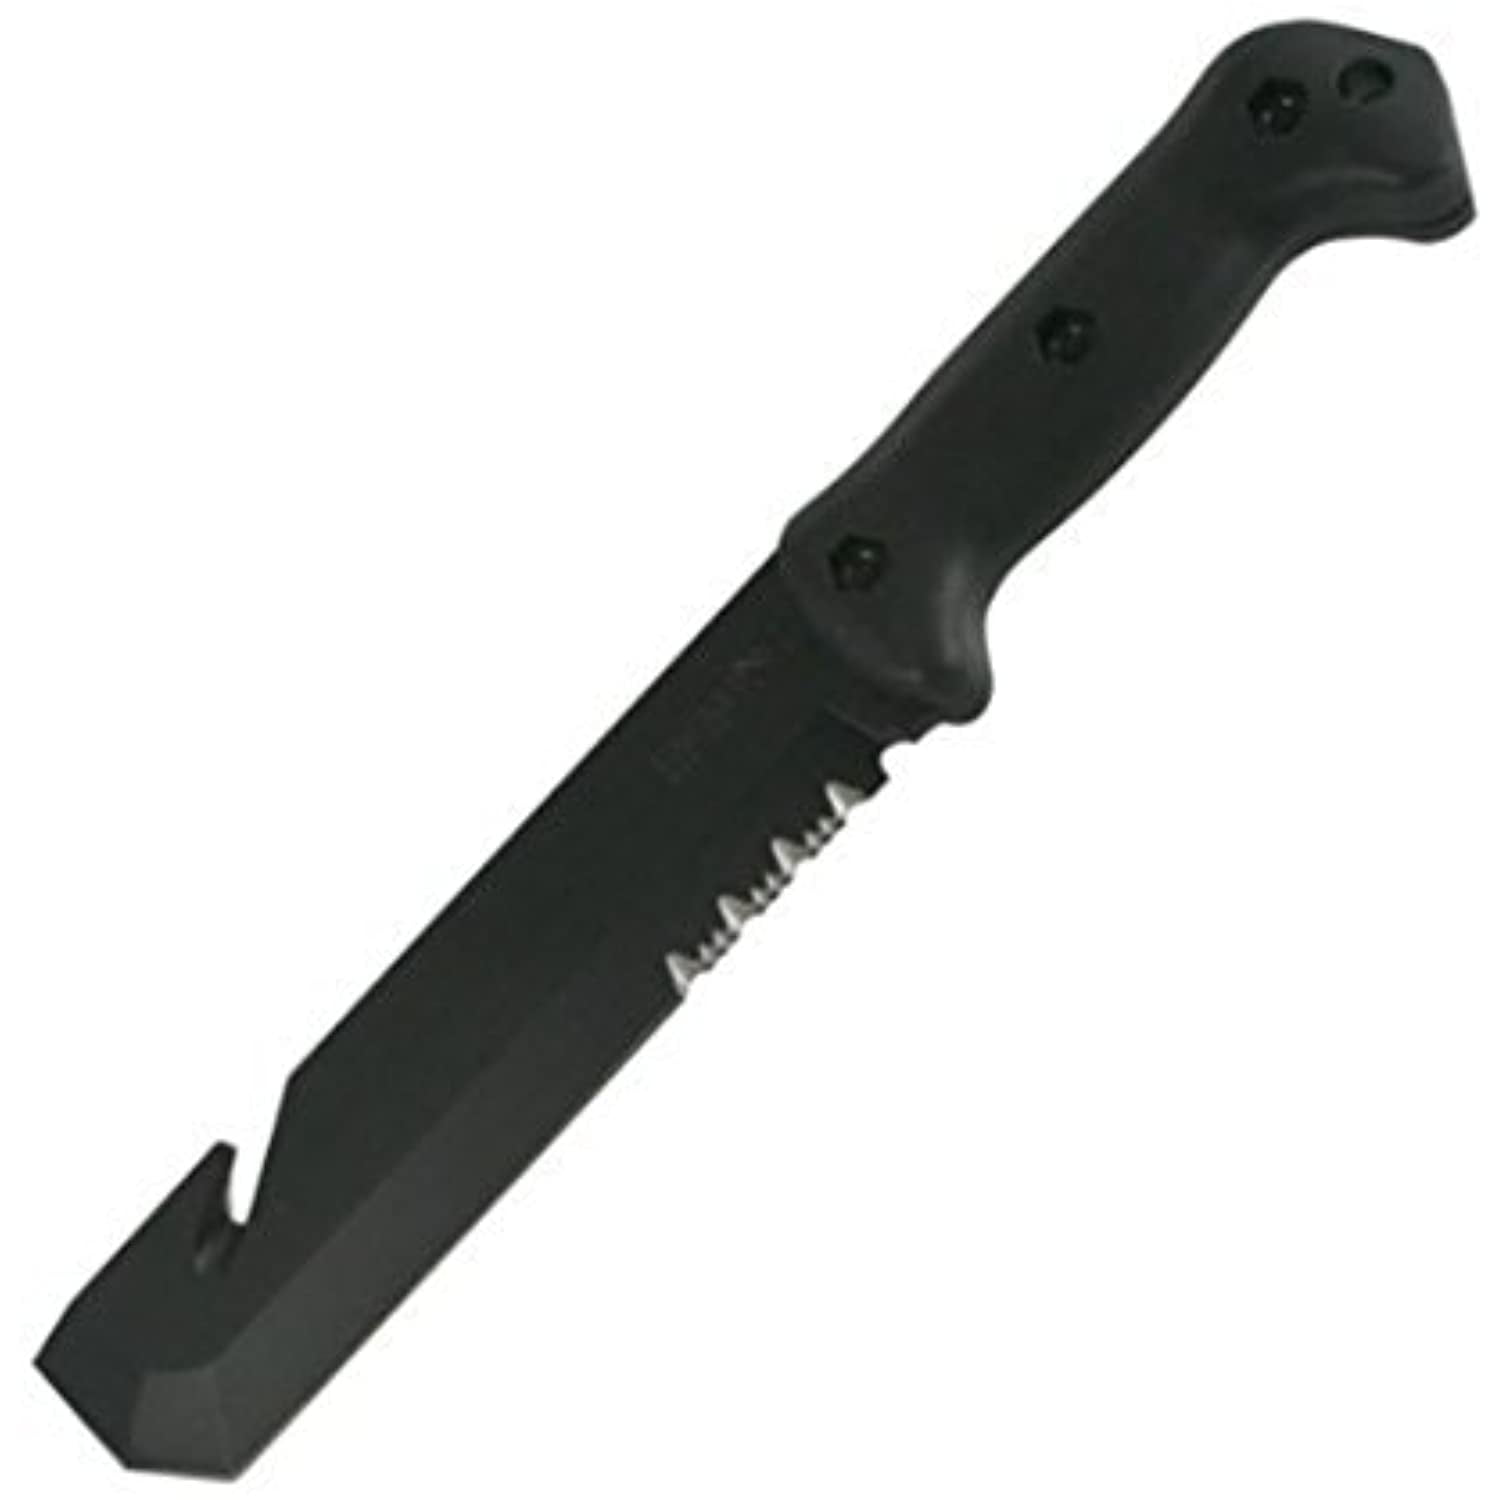 Buy Ka Bar Becker Knife Bk3 Becker Tac Tool Online At Lowest Price In